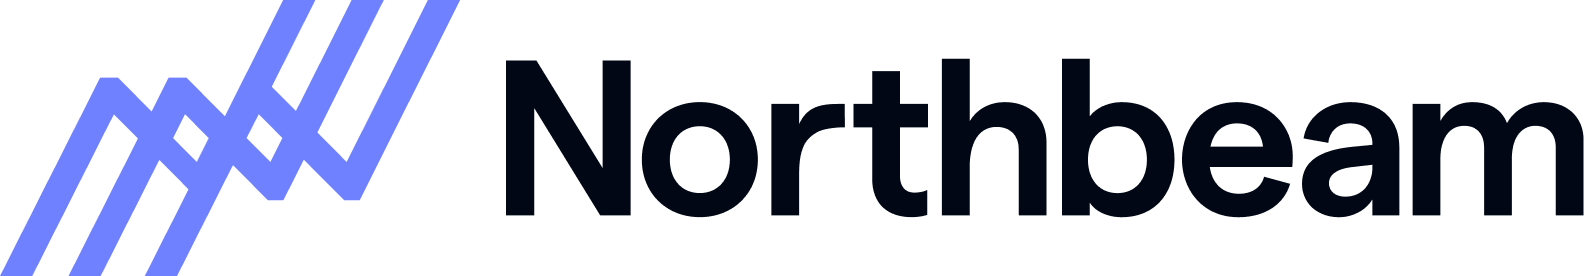 Northbeam Logo